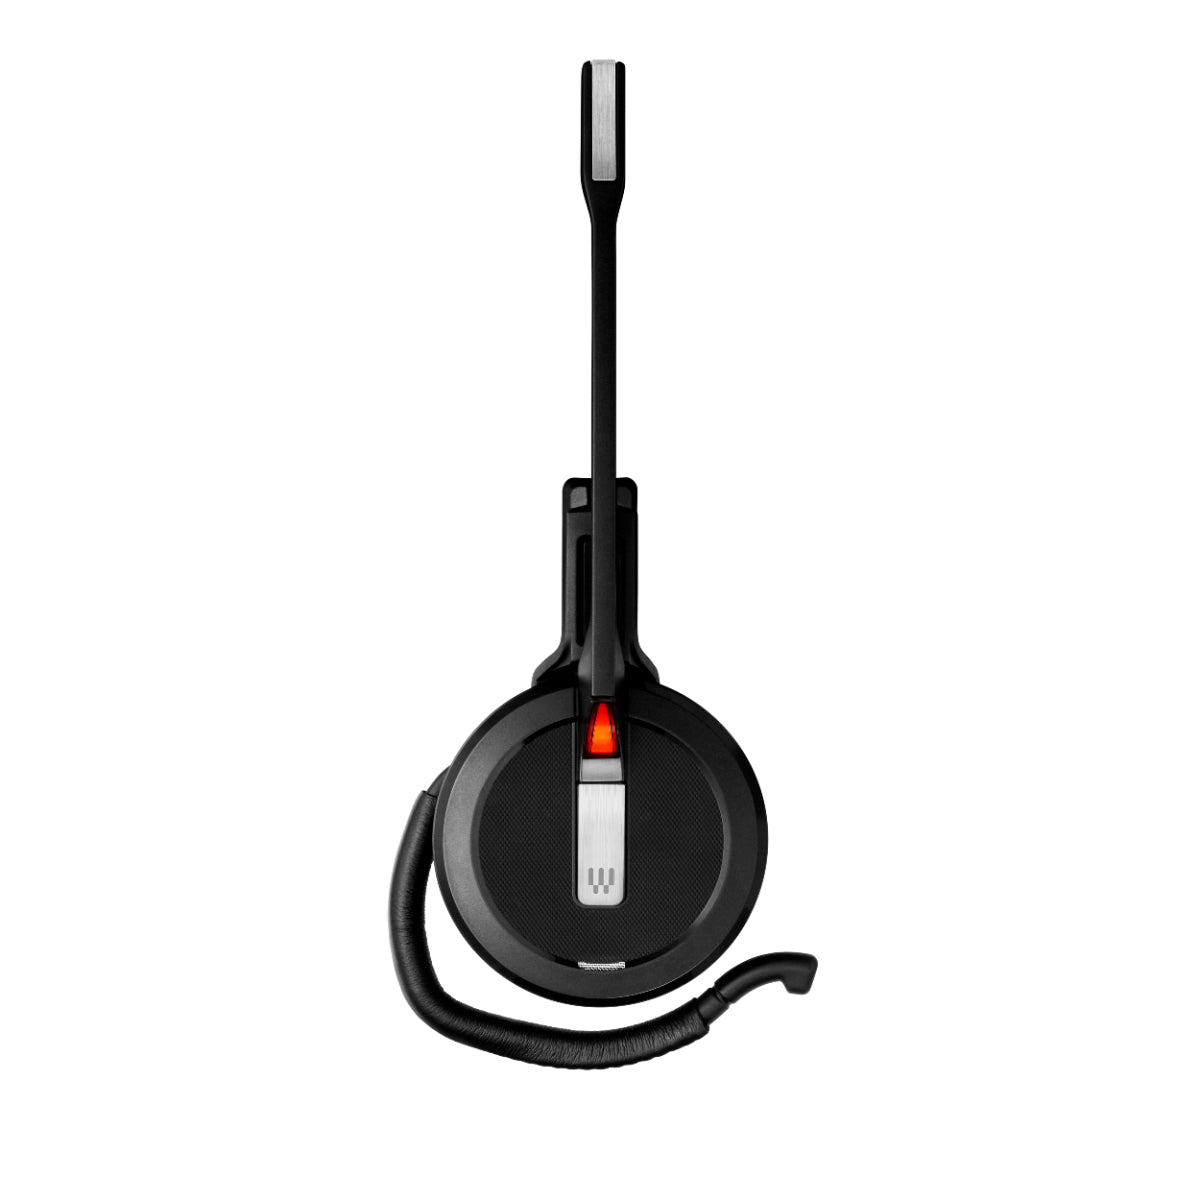 EPOS IMPACT SDW 5015 - EU Wireless Monaural DECT Headset, Black, With Dual Connectivity